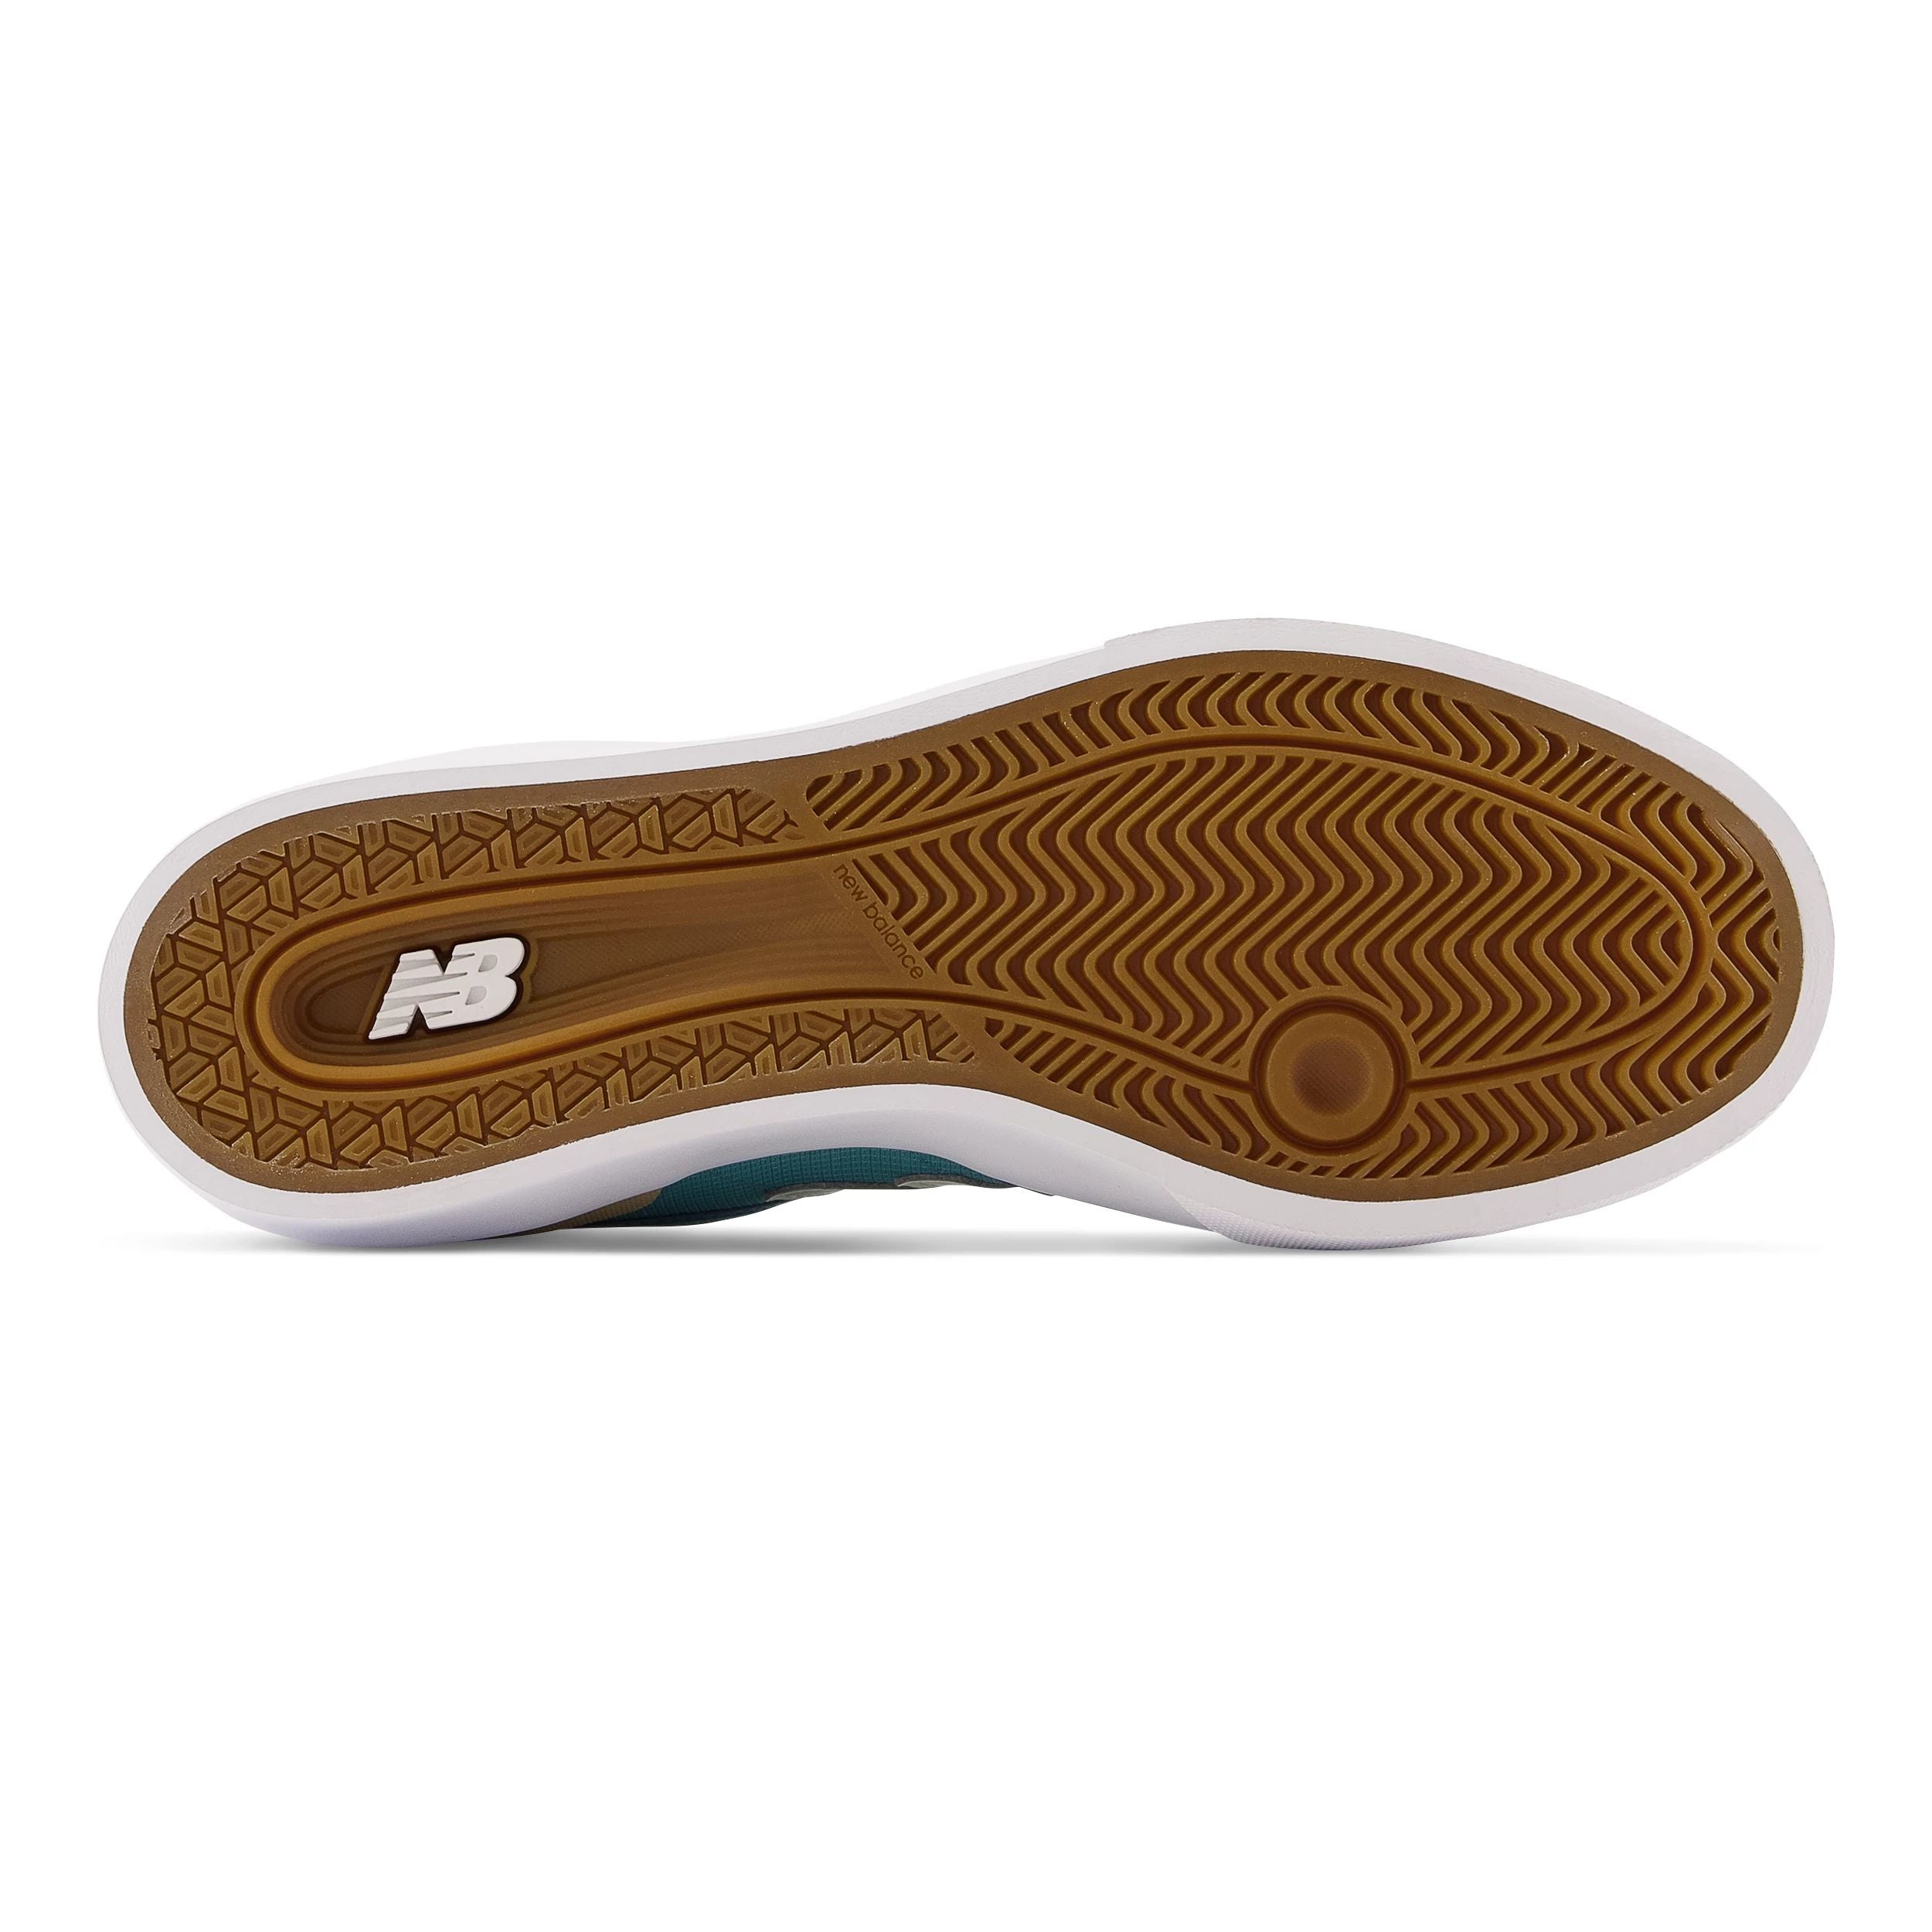 Aqua/Tan NM272 NB Numeric Skate Shoe Bottom